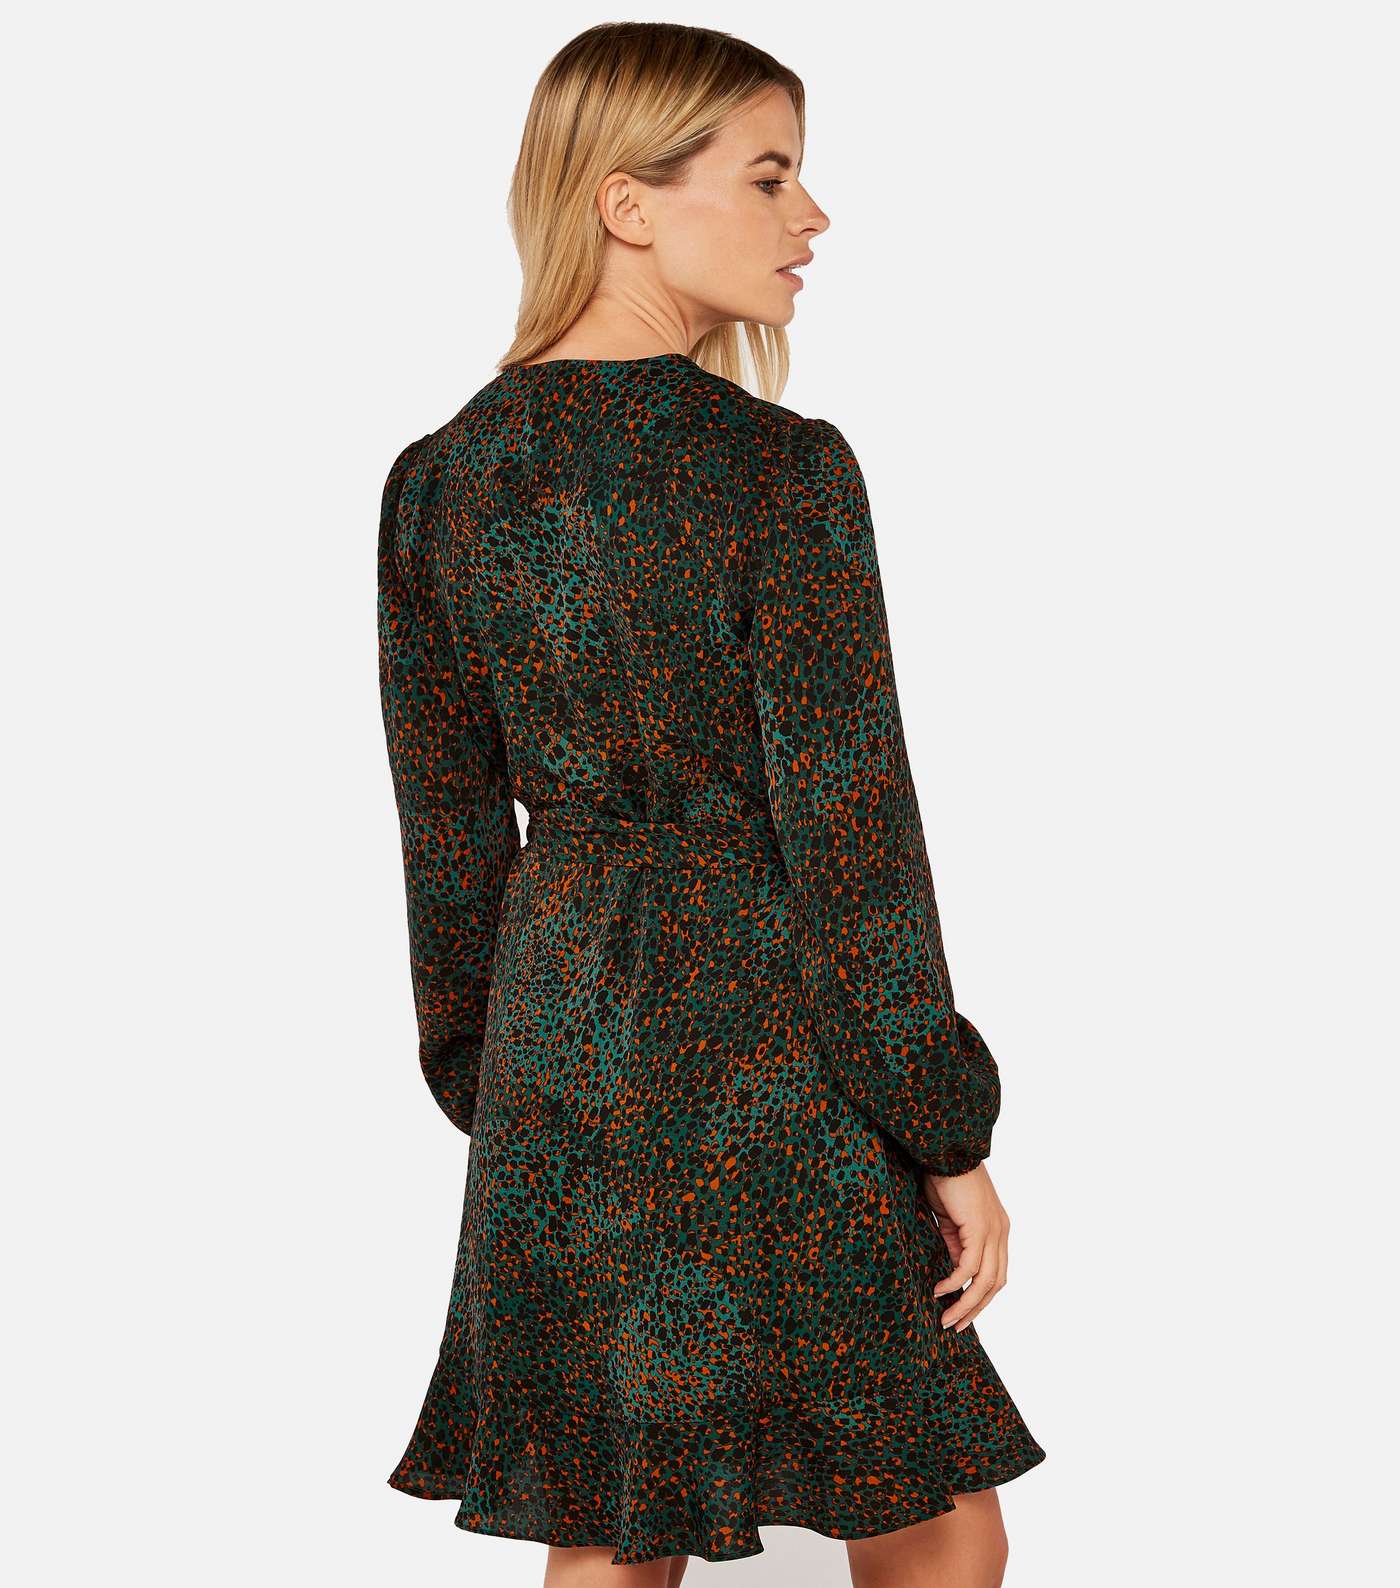 Apricot Green Leopard Print Frill Wrap Dress Image 3